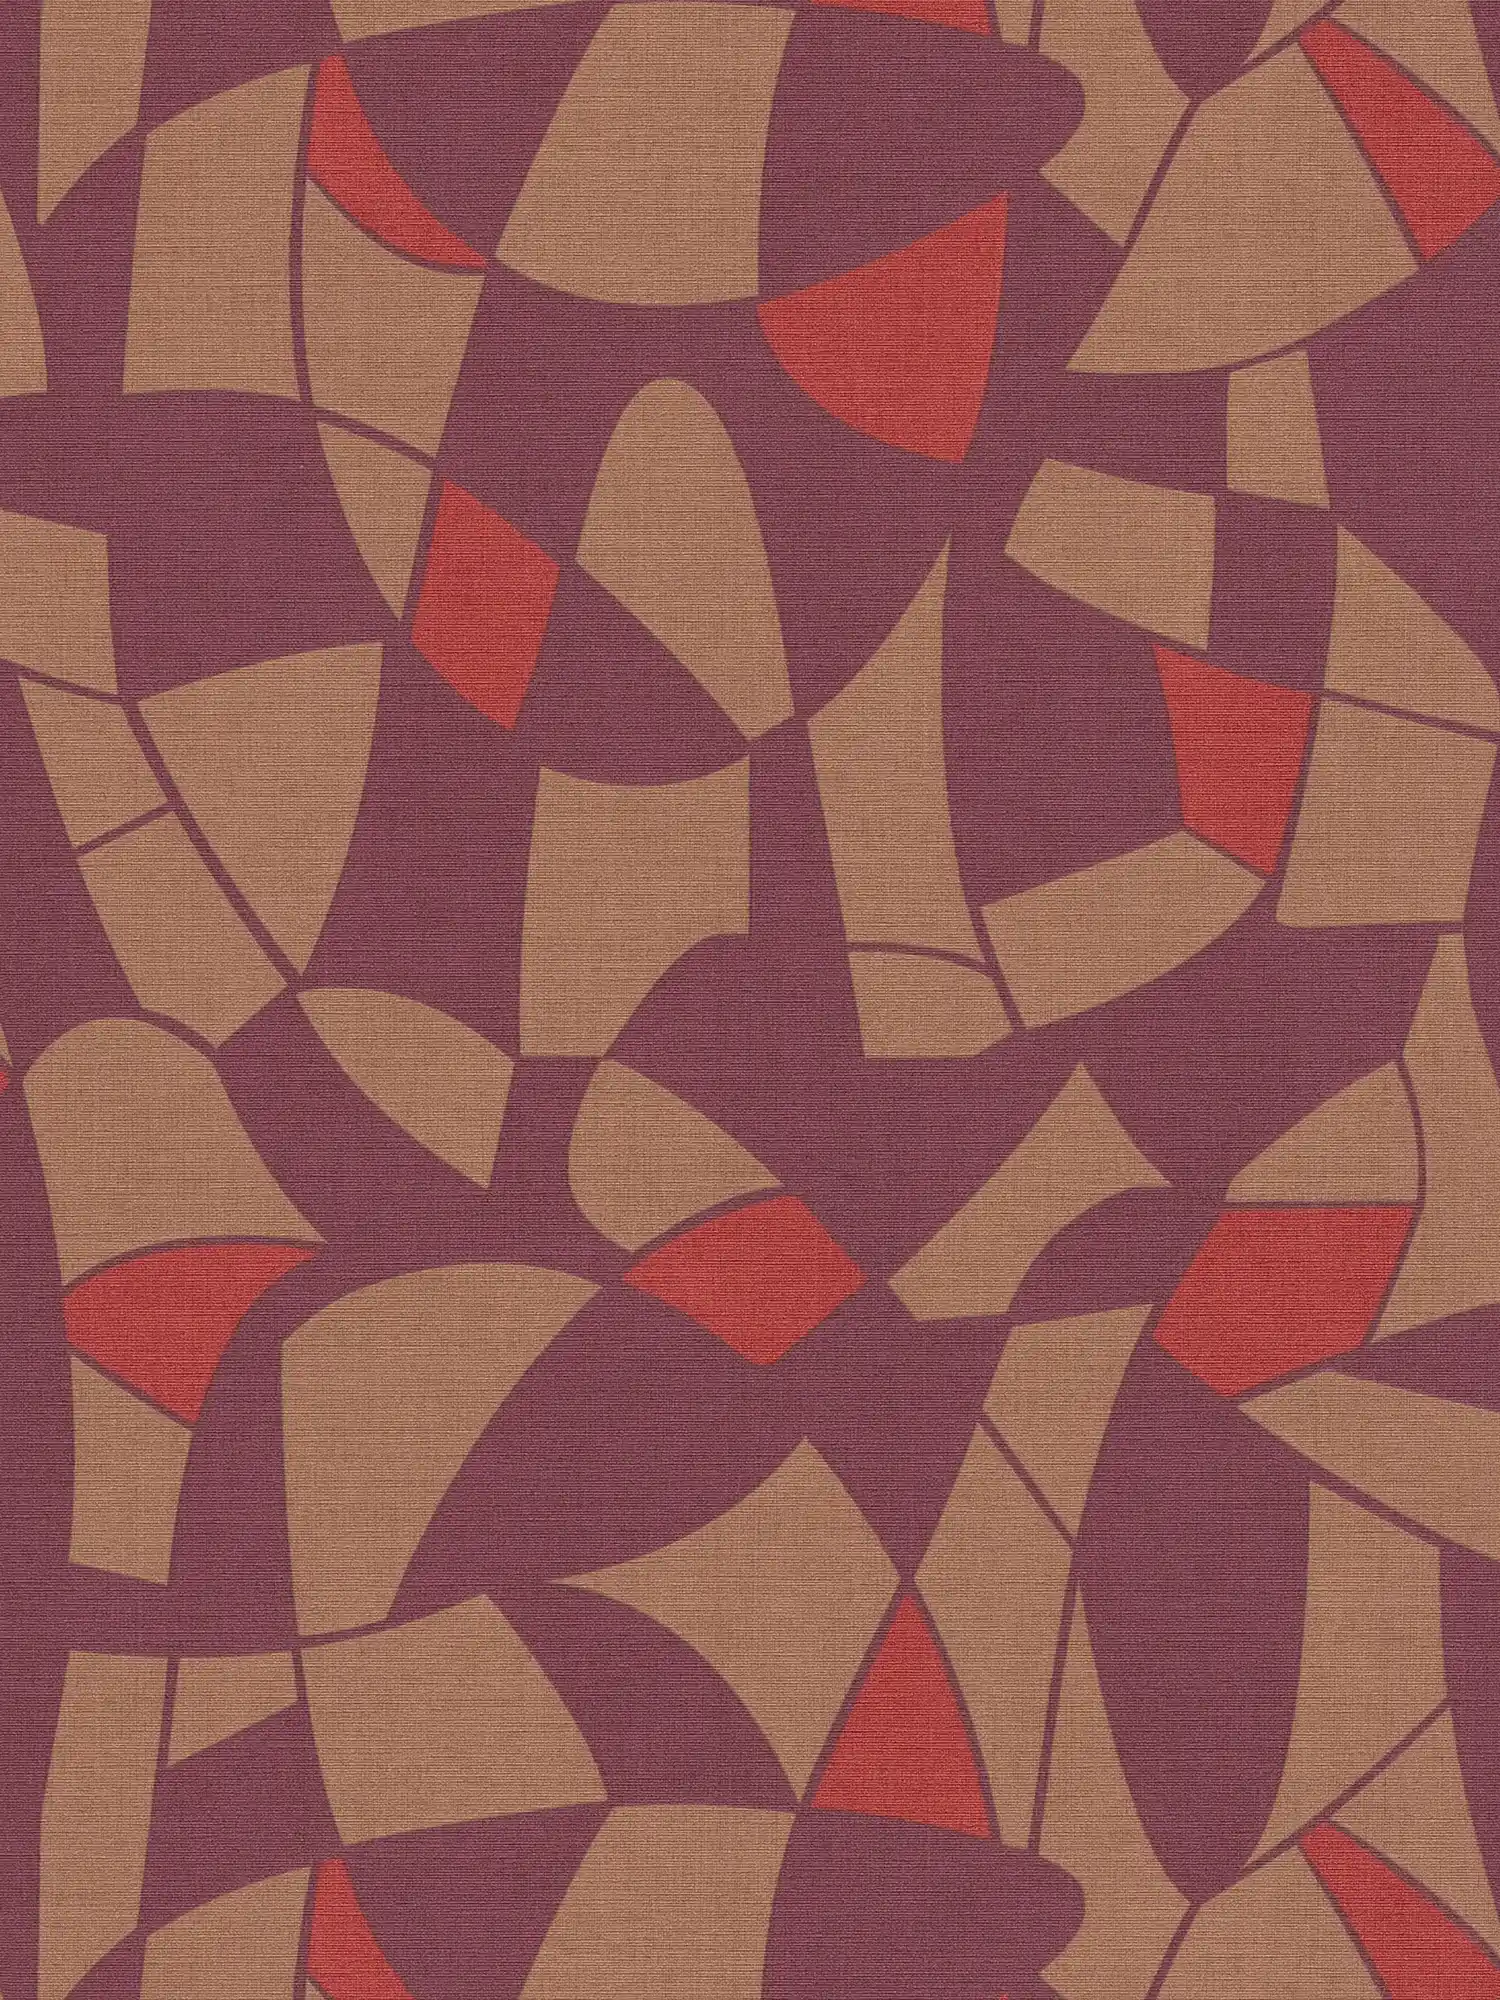 Vliestapete in dunklen Farben im abstrakten Muster – Lila, Braun, Rot
